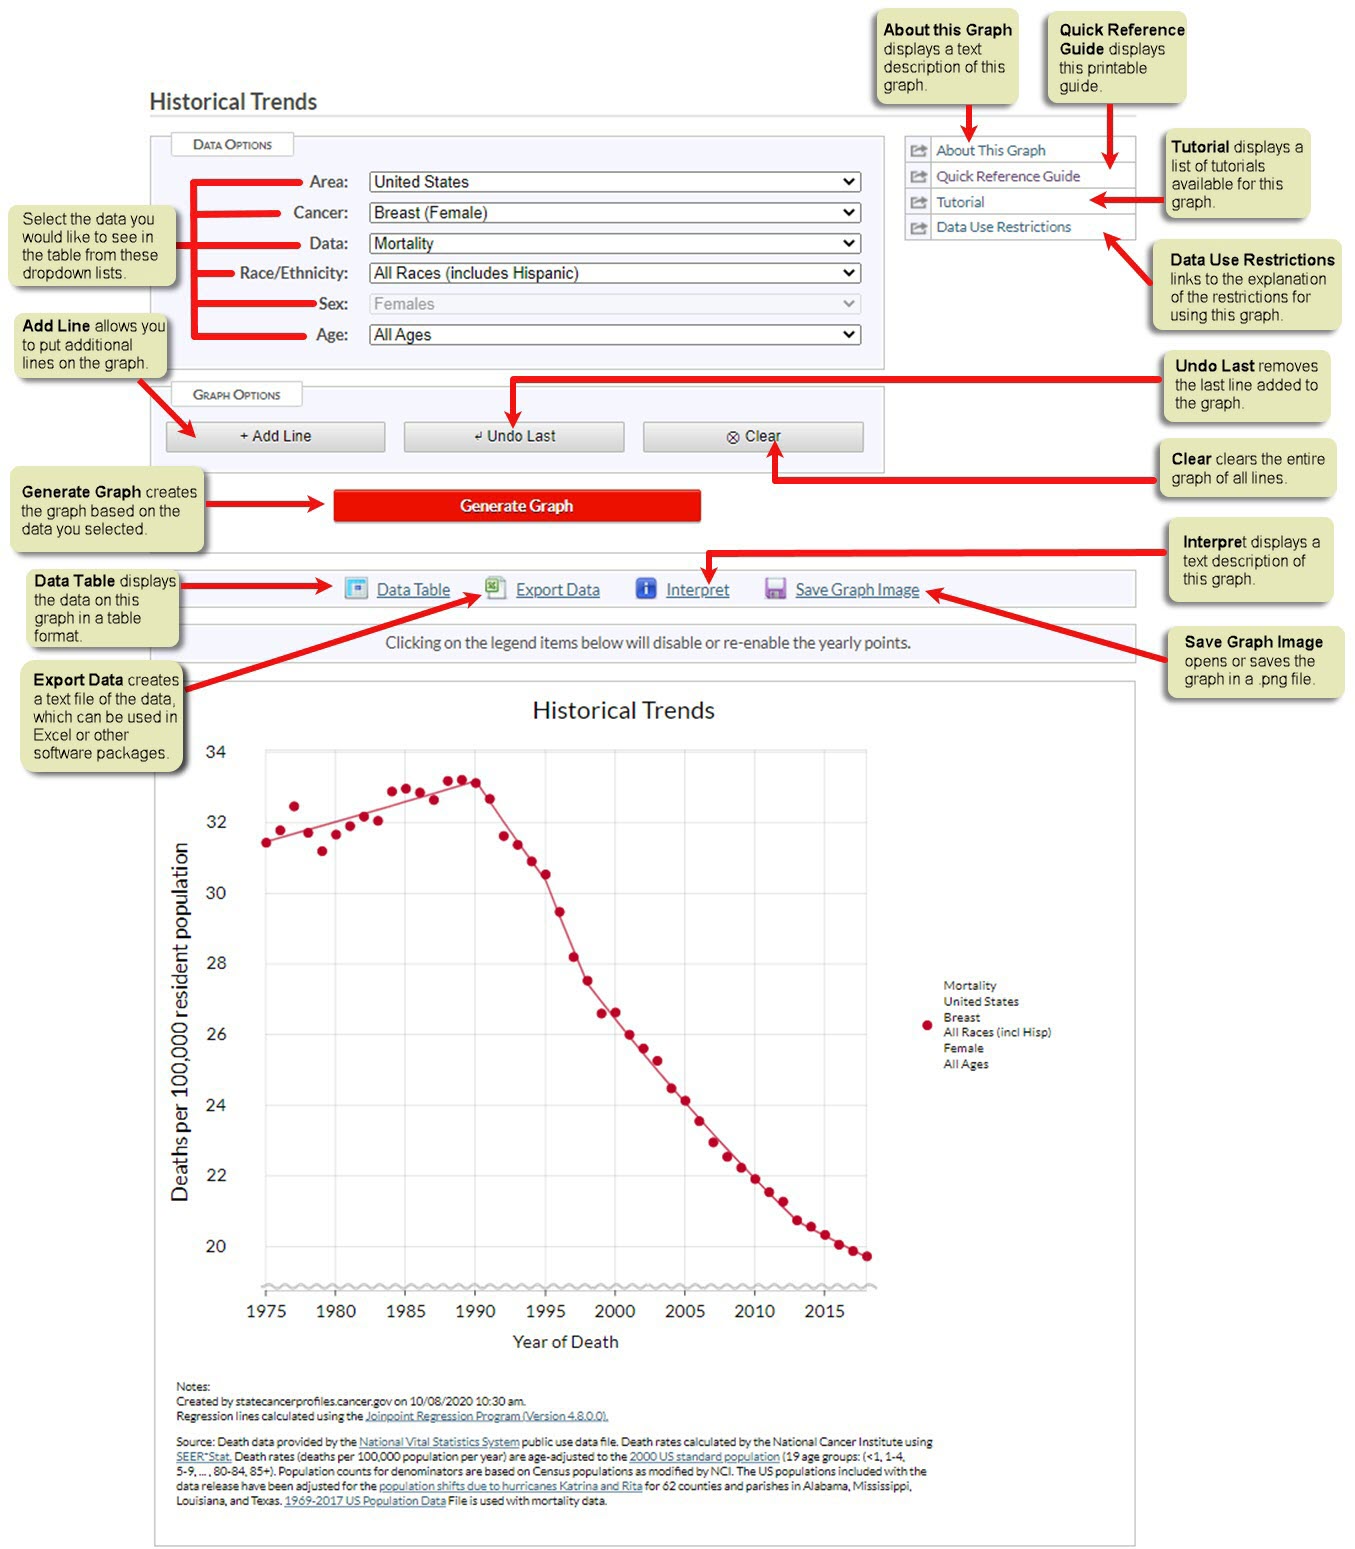 Historical Trends graph showing text descriptions of controls